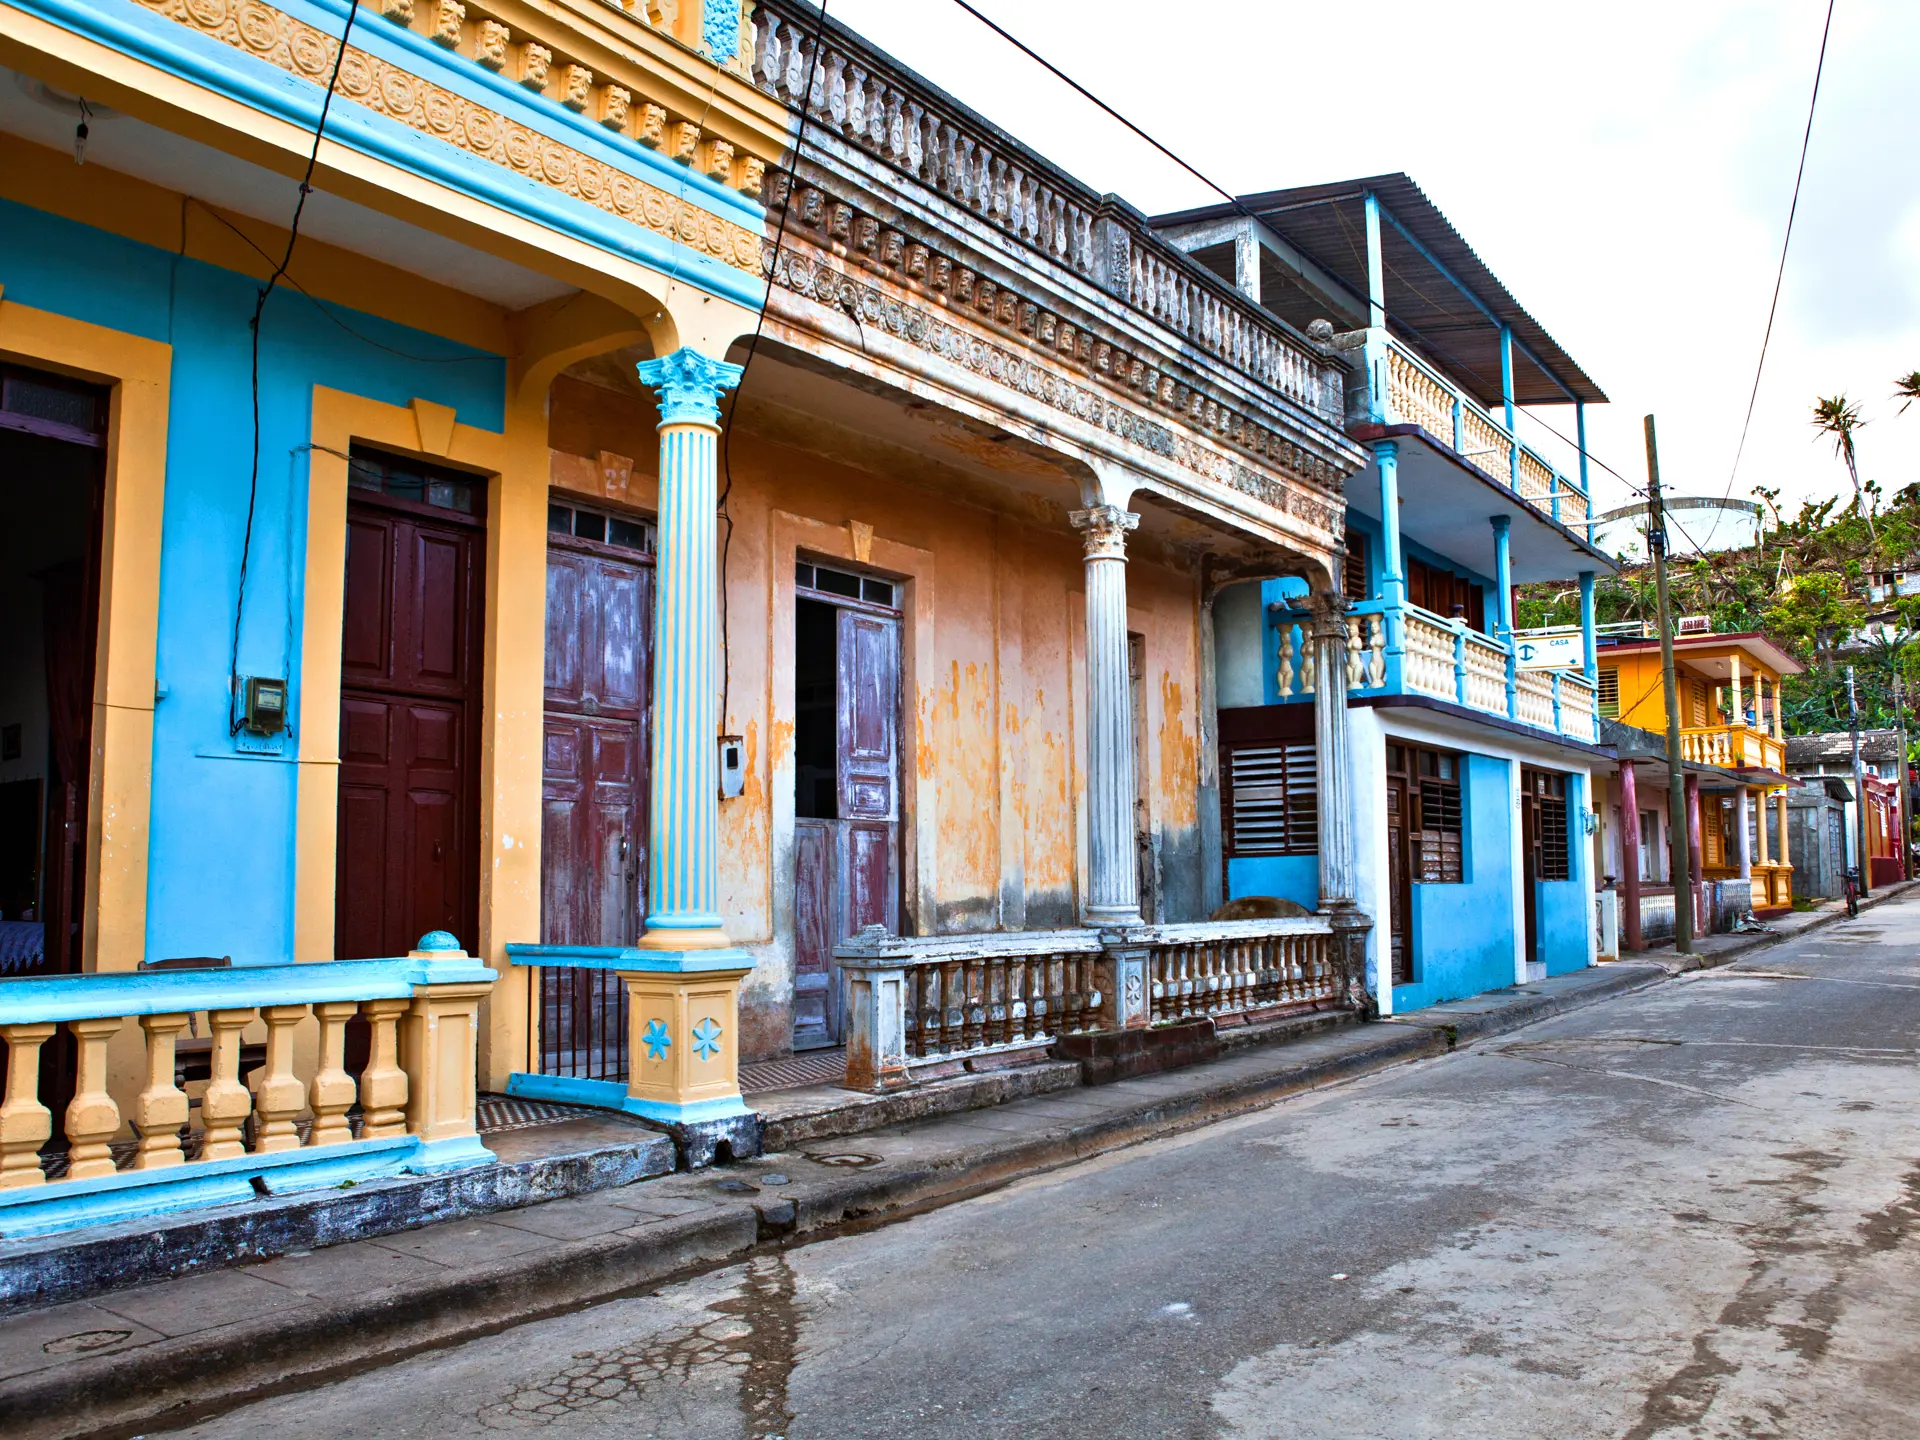 shutterstock_597131270 Old colorful houses in Baracoa, Cuba.jpg